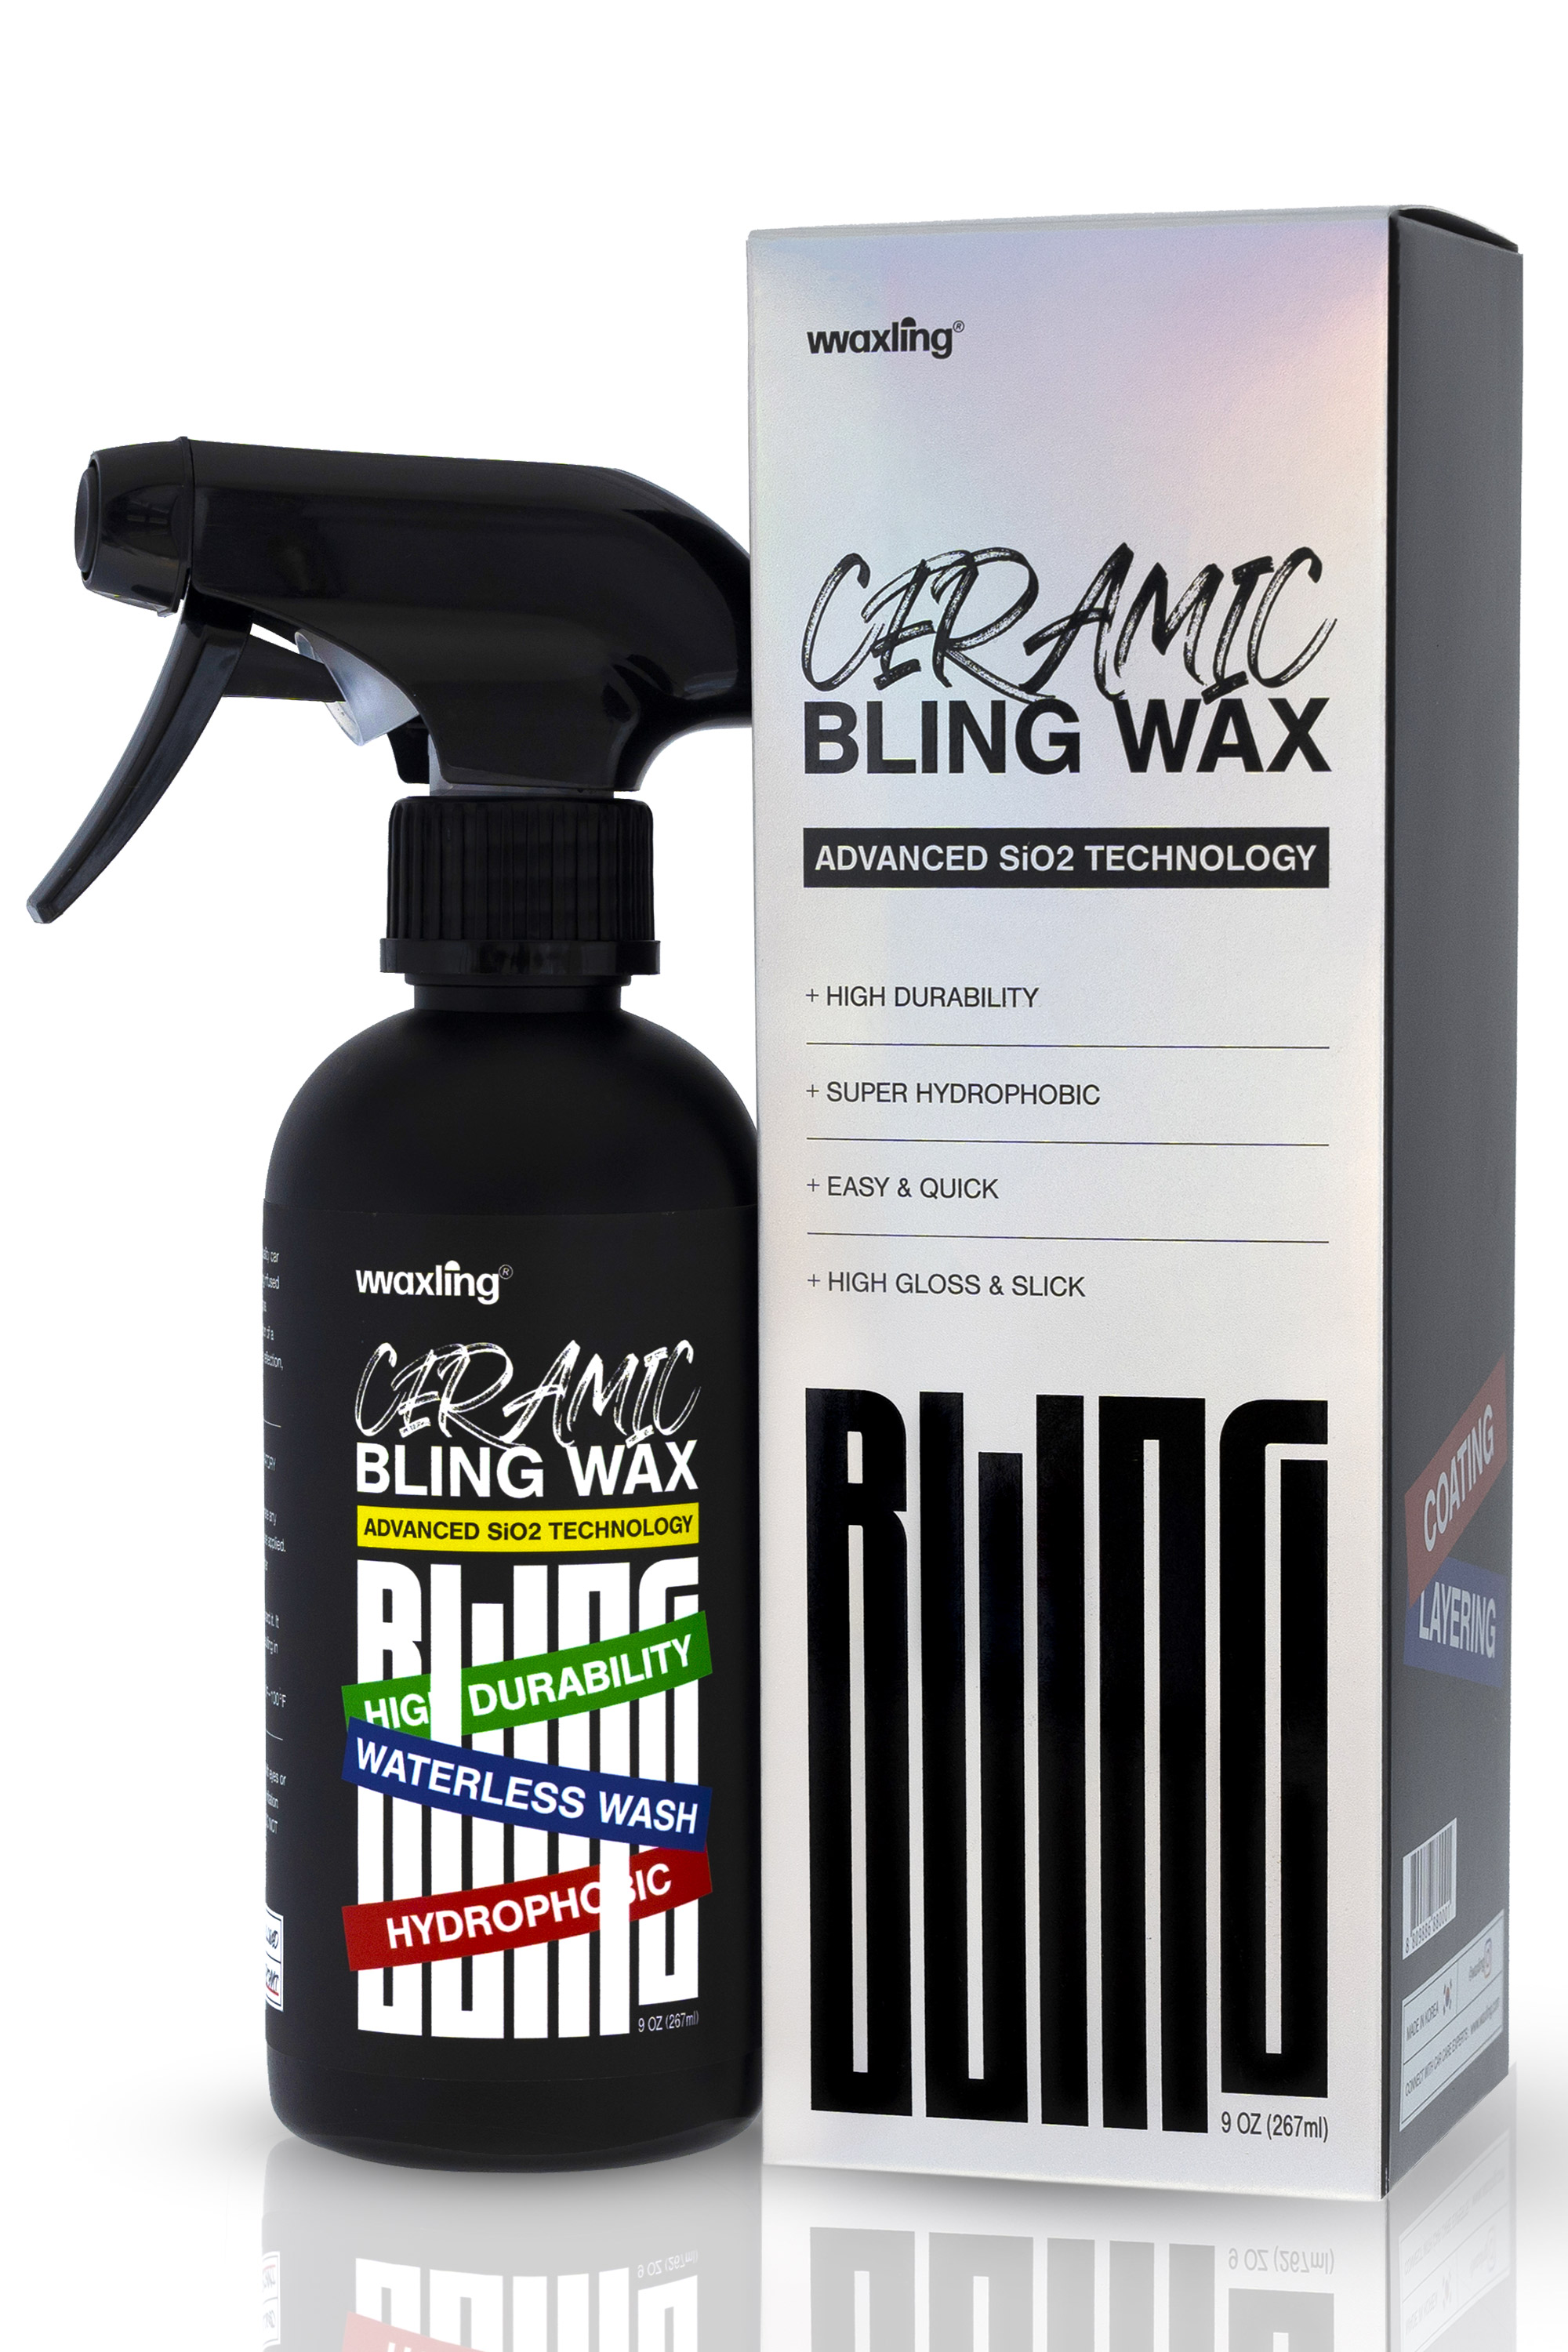 WAXLING Ceramic Bling Wax, Ceramic Coating Car Wax, Waterless Car Wash &  Car Wax Polish, Hydrophobic Car Wax Spray for High Durability, Gloss,  Slick